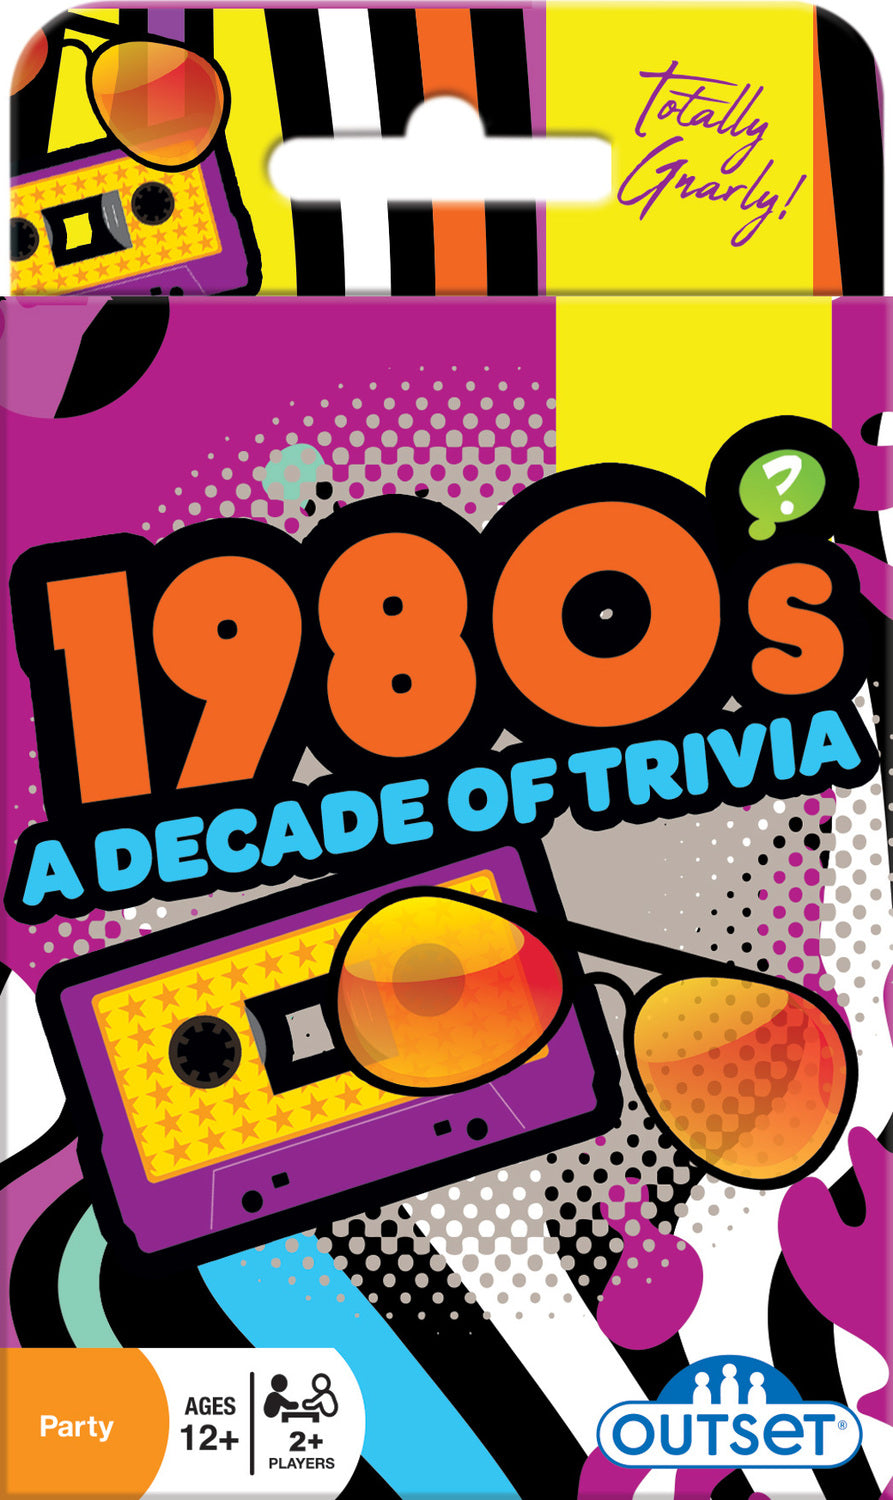 1980's Decade of Trivia